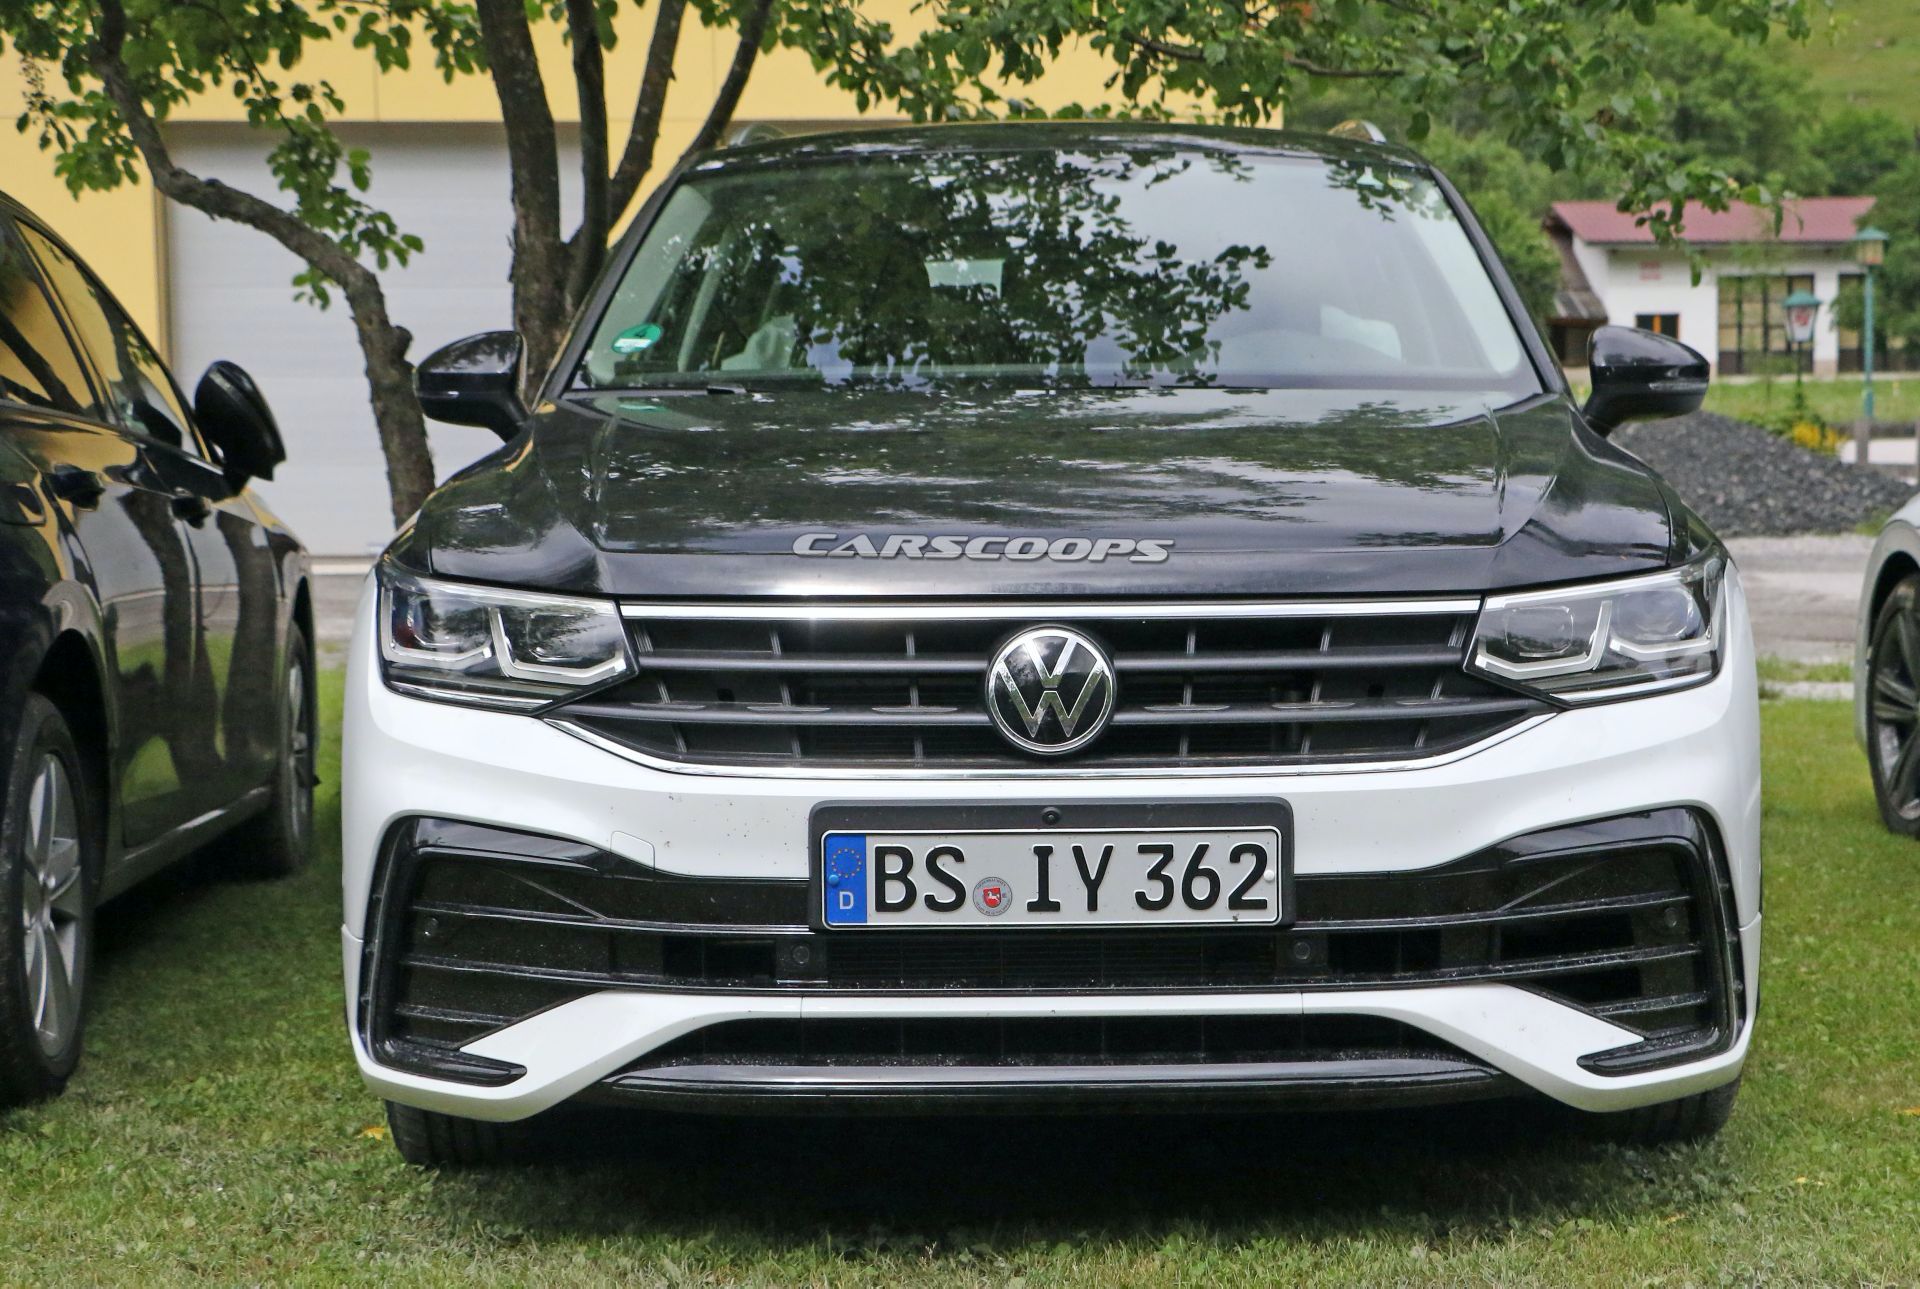 2021-VW-Tiguan-facelift-spy-shots-2.jpg